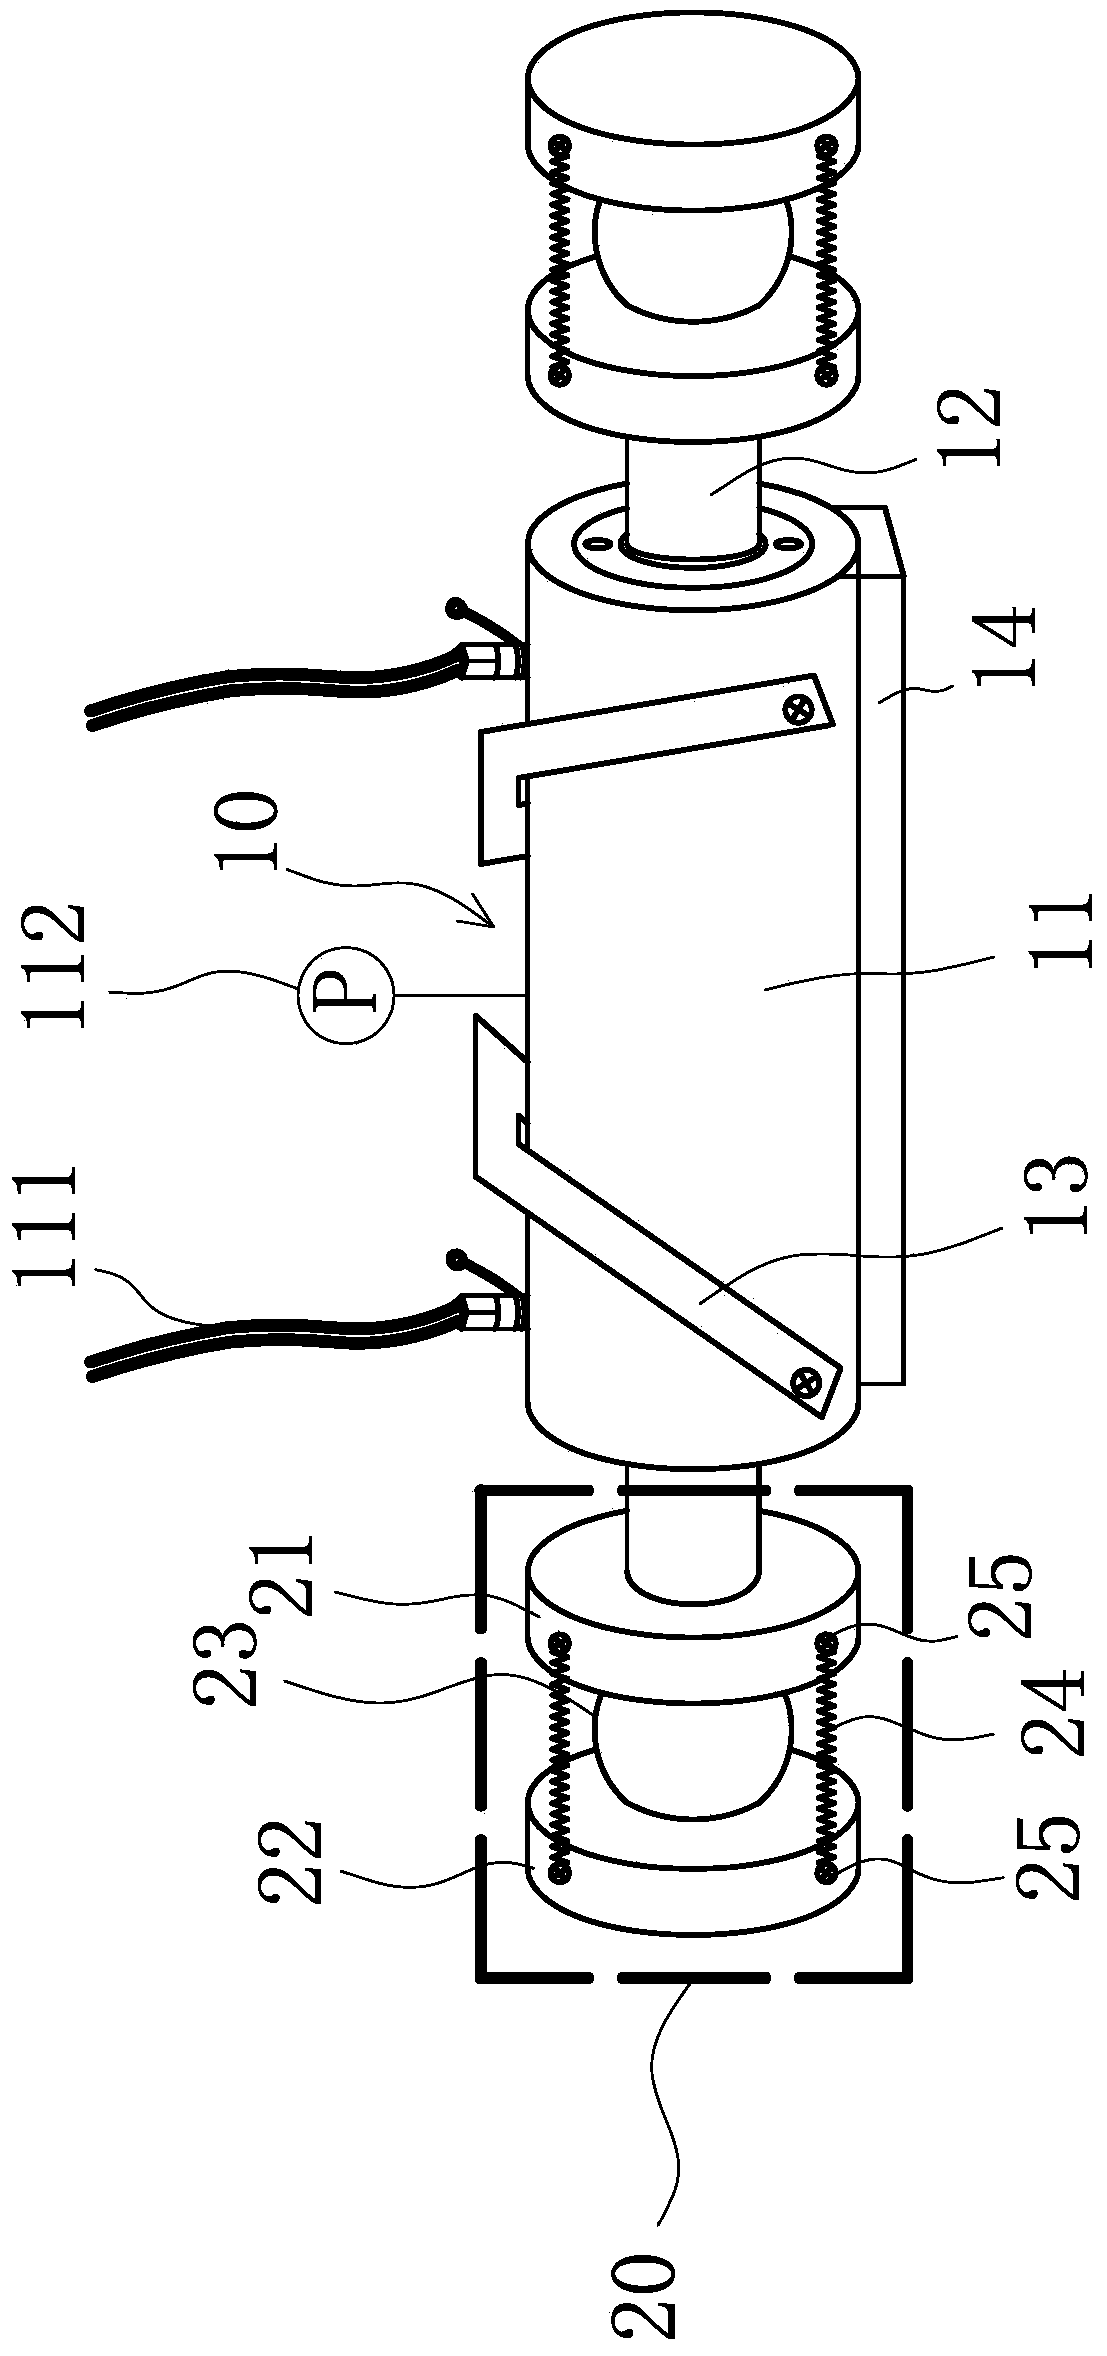 Pile horizontal bearing capacity test device